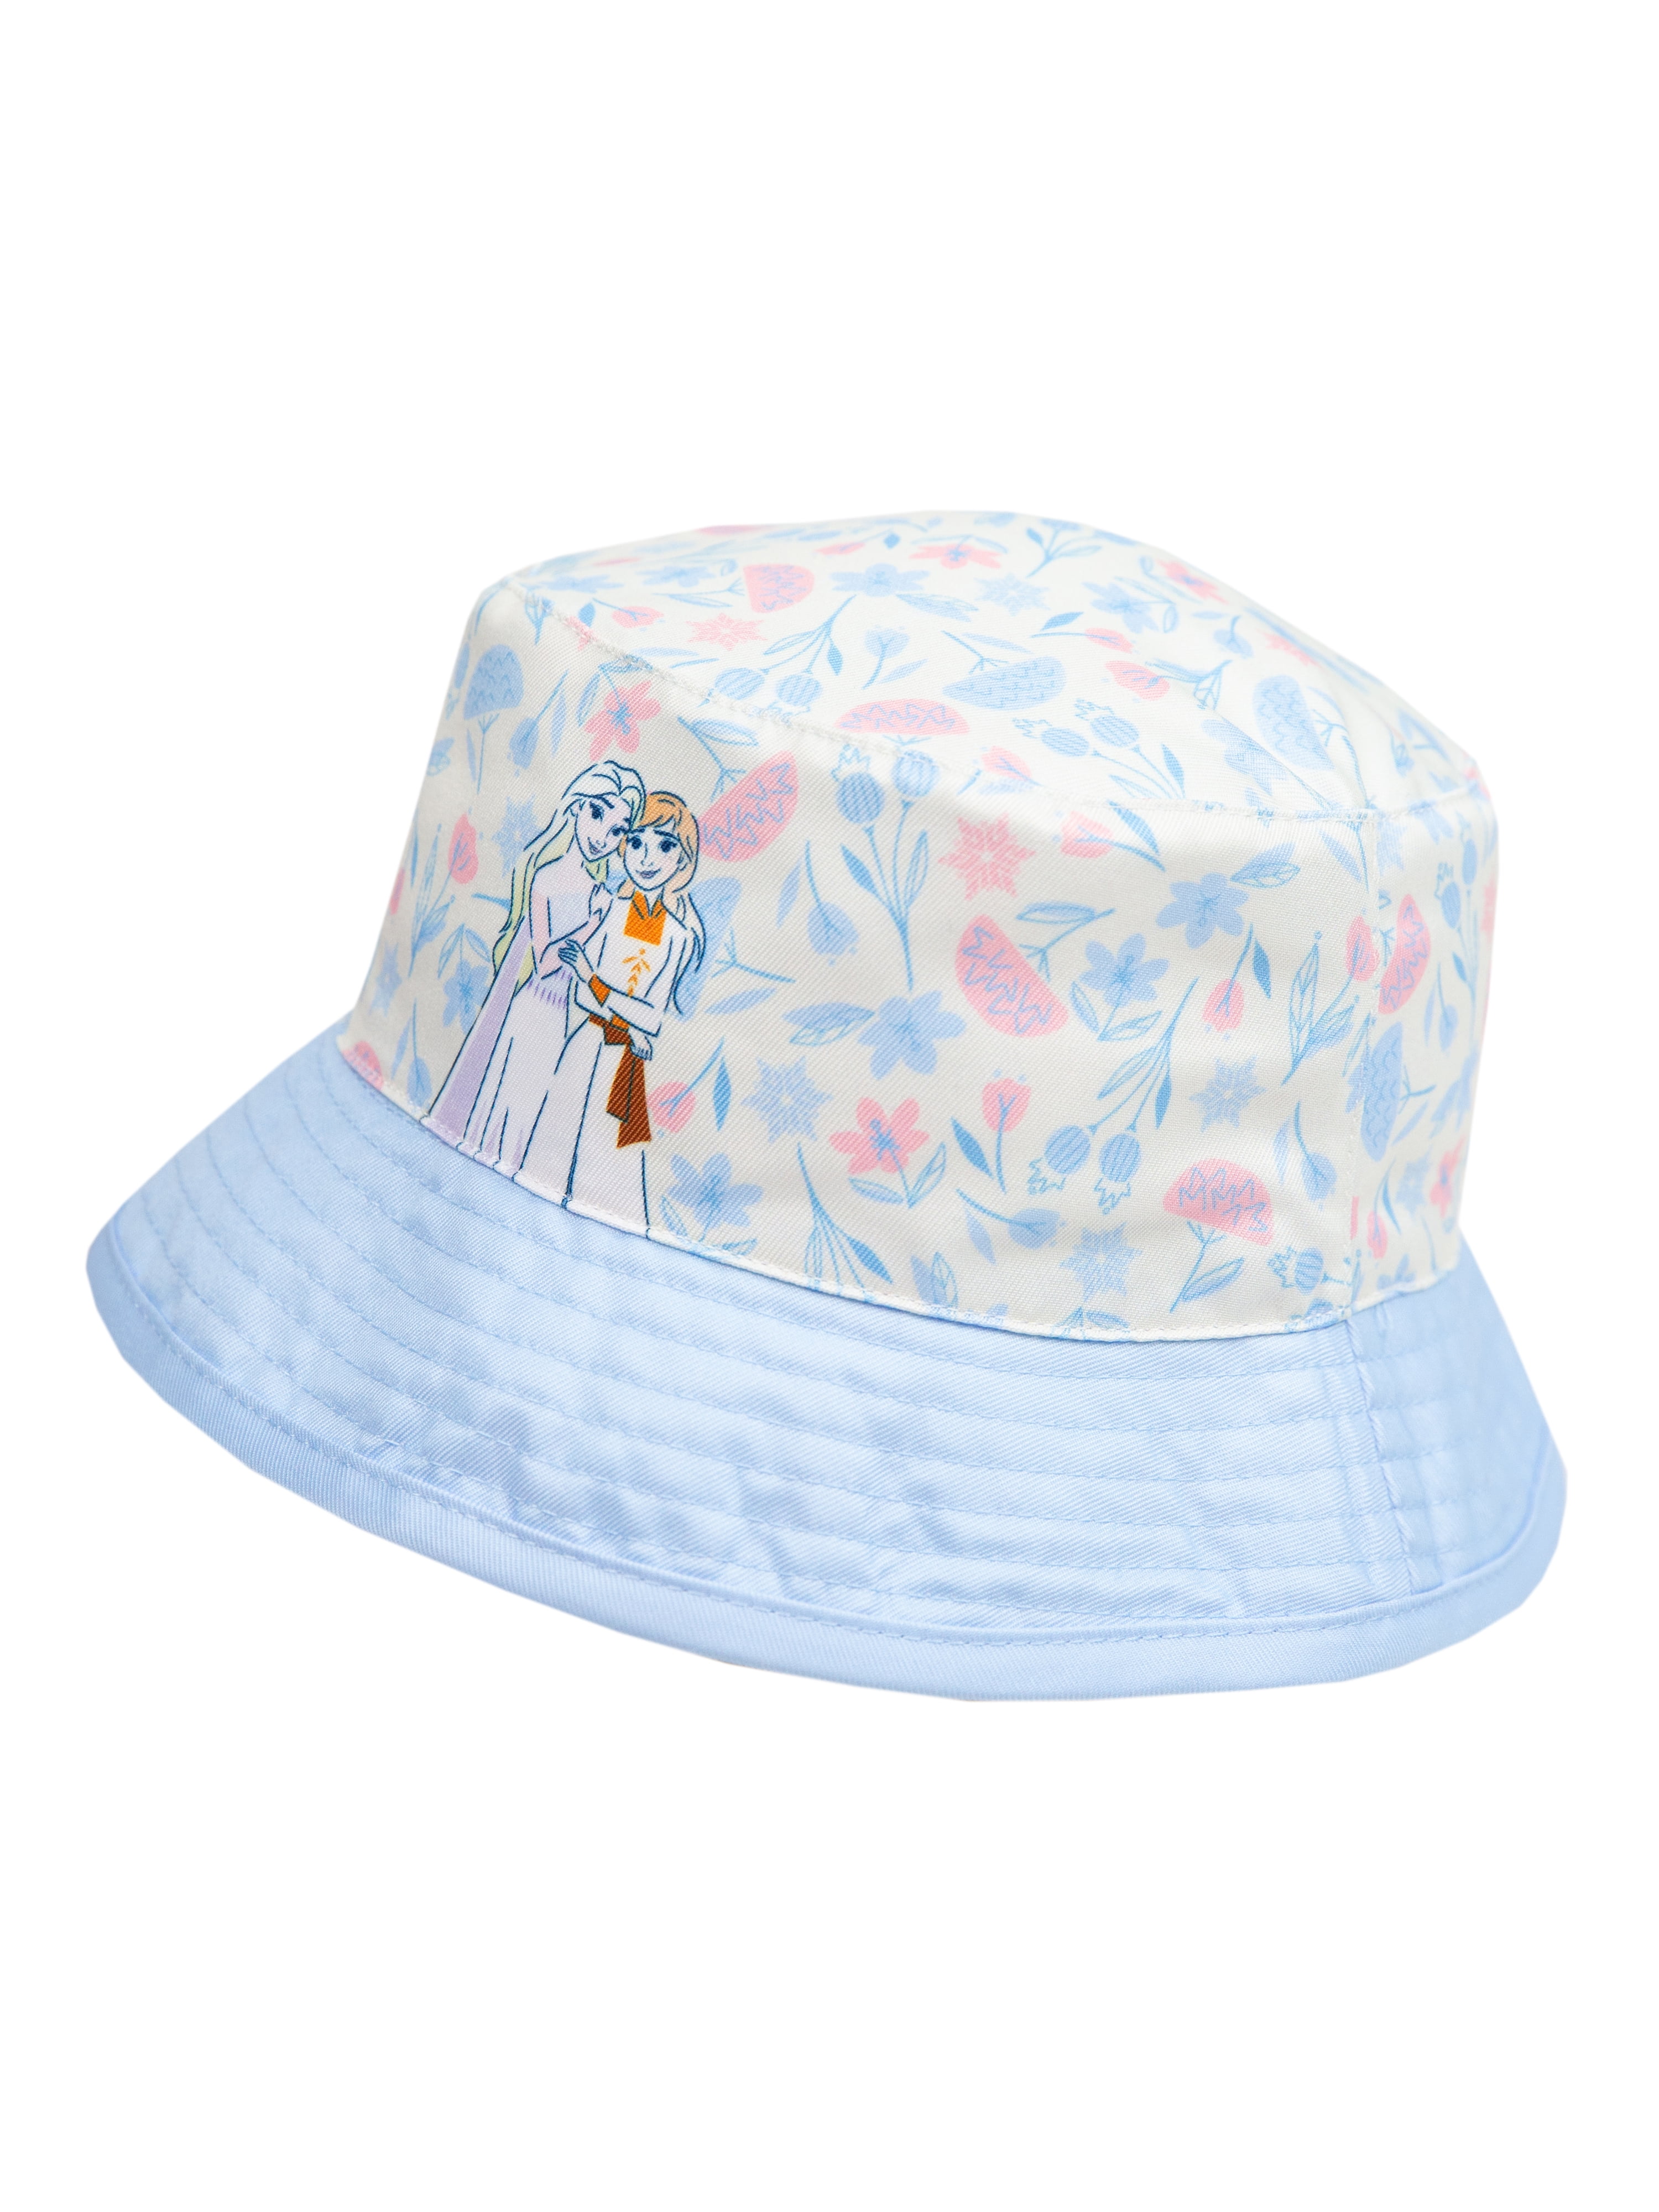 Disney Frozen Toddler Girls Blue Reversible Bucket Style Swim Hat